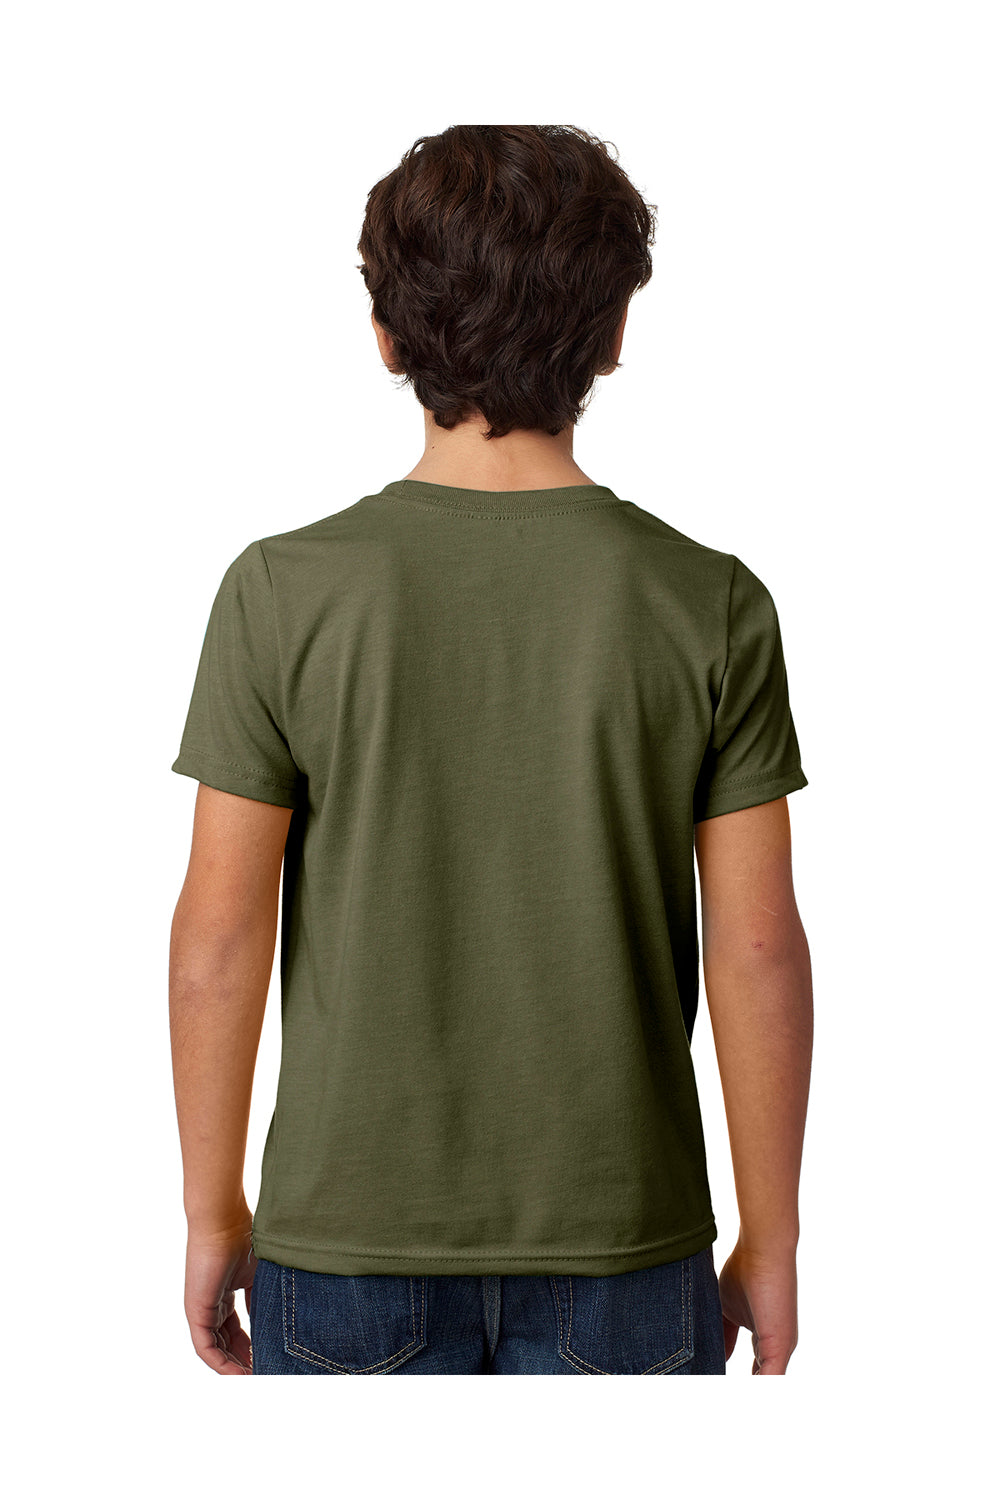 Next Level 3312 Youth CVC Jersey Short Sleeve Crewneck T-Shirt Military Green Back